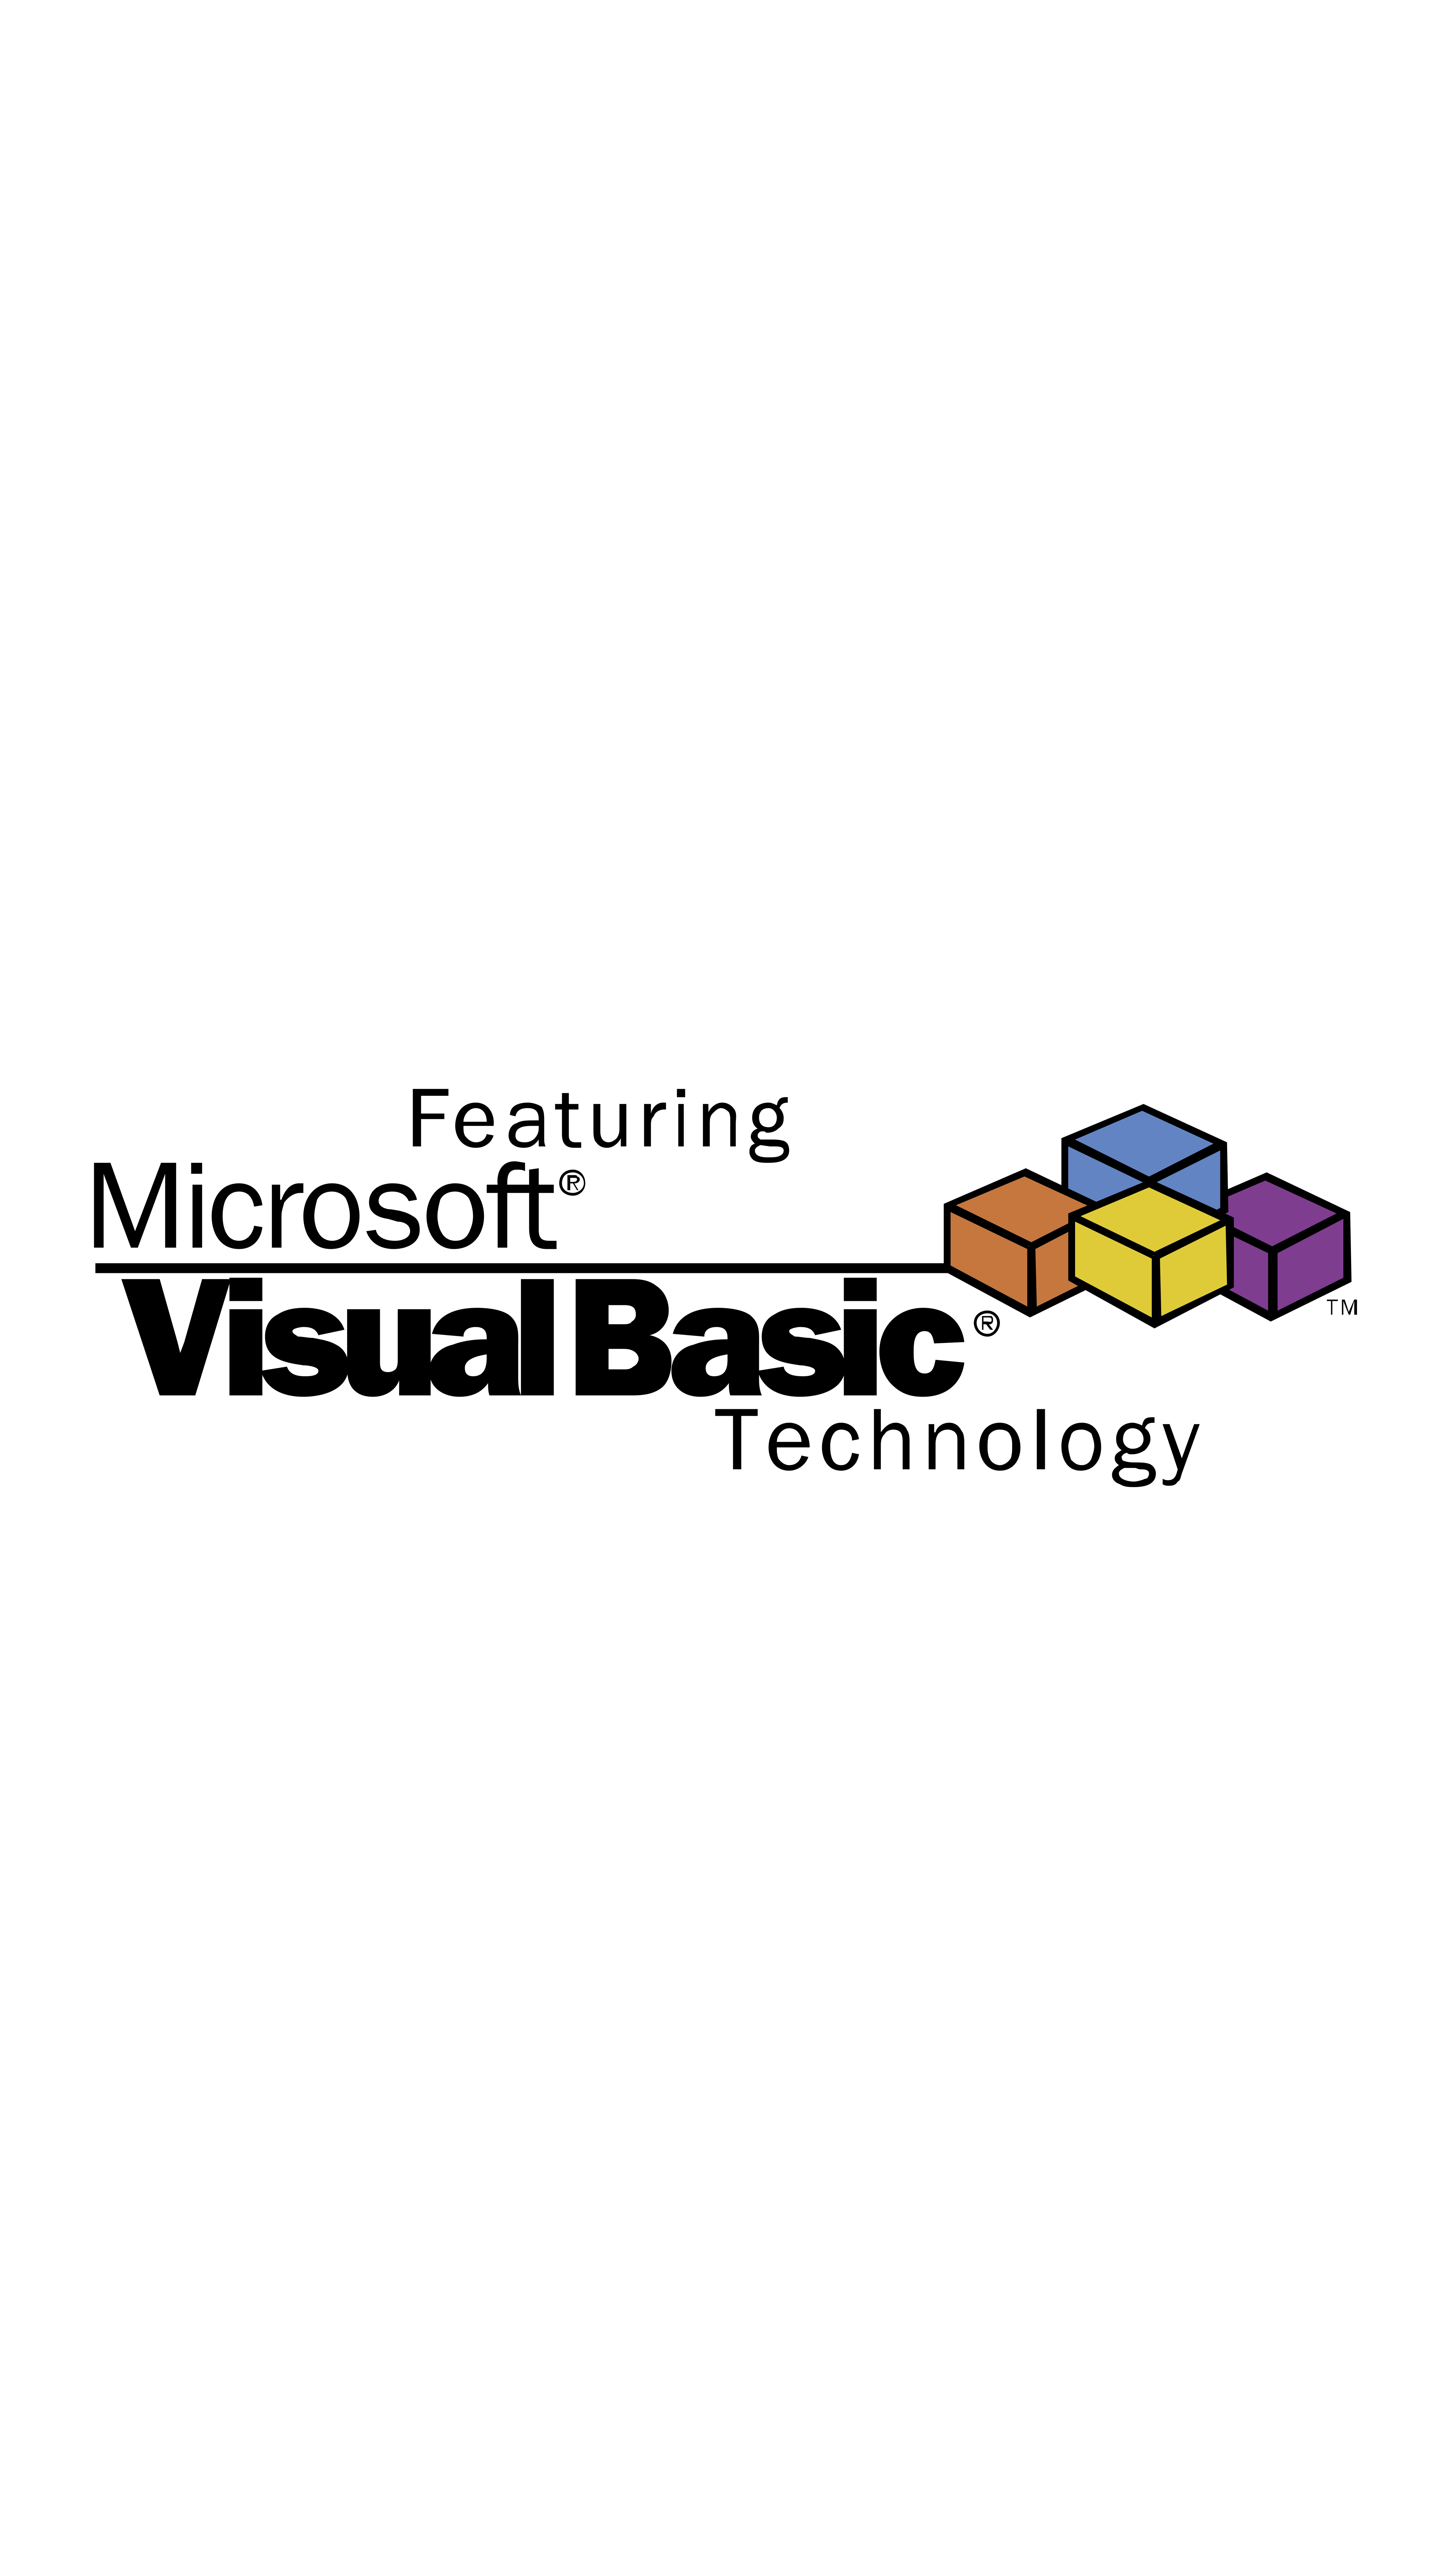 Formation Visual Basic, Formation programmation Visual Basic, Formation Bruxelles Belgique